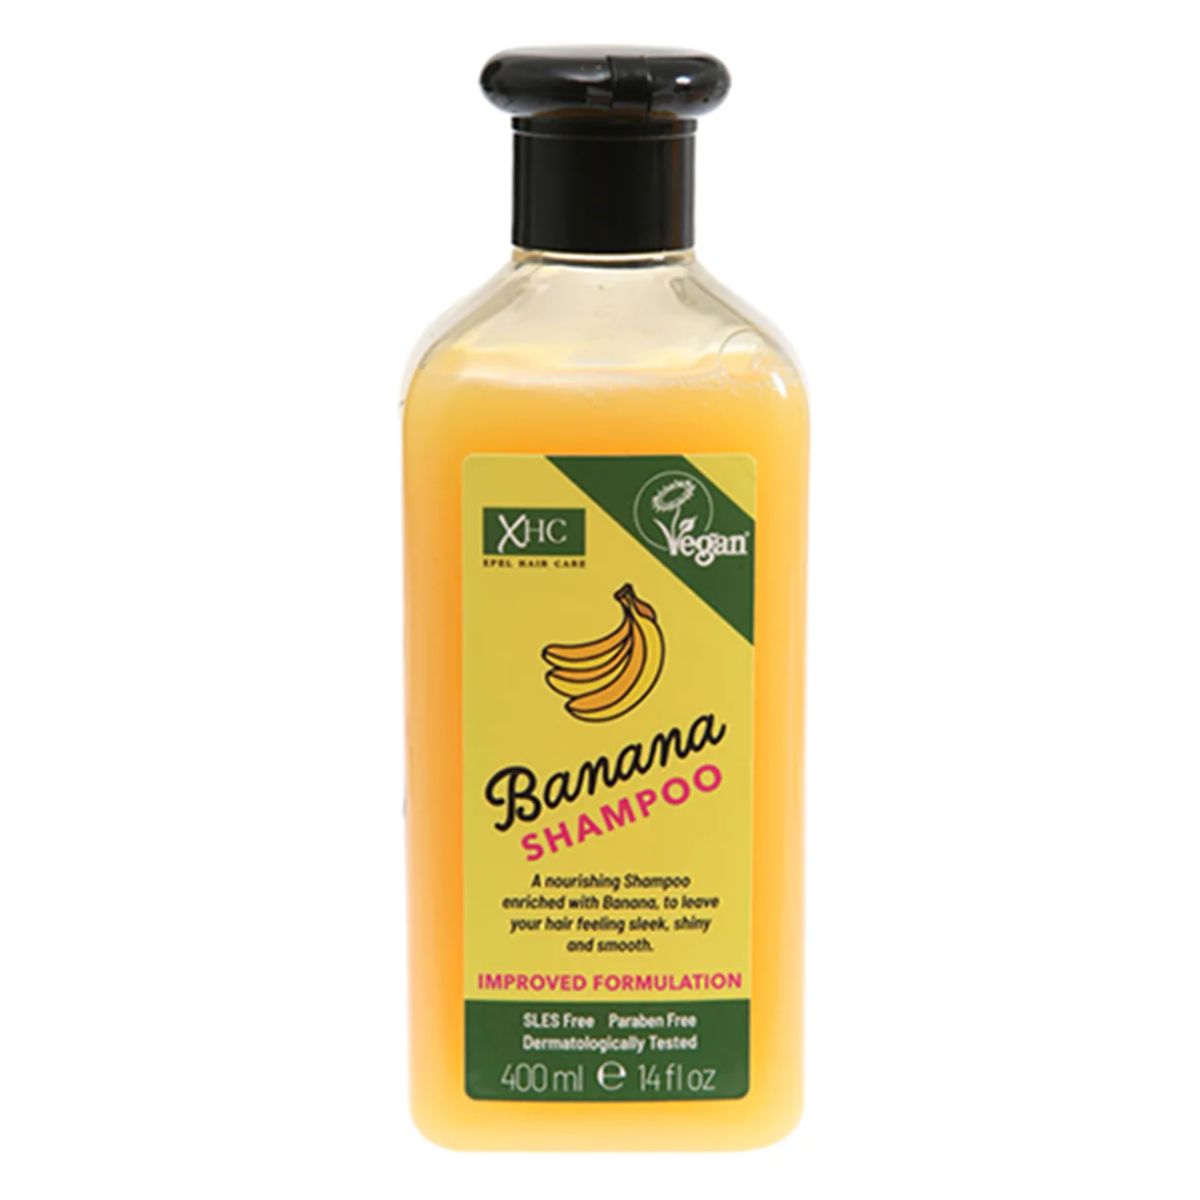 A bottle of XHC Vegan Banana Shampoo, 400 ml size.